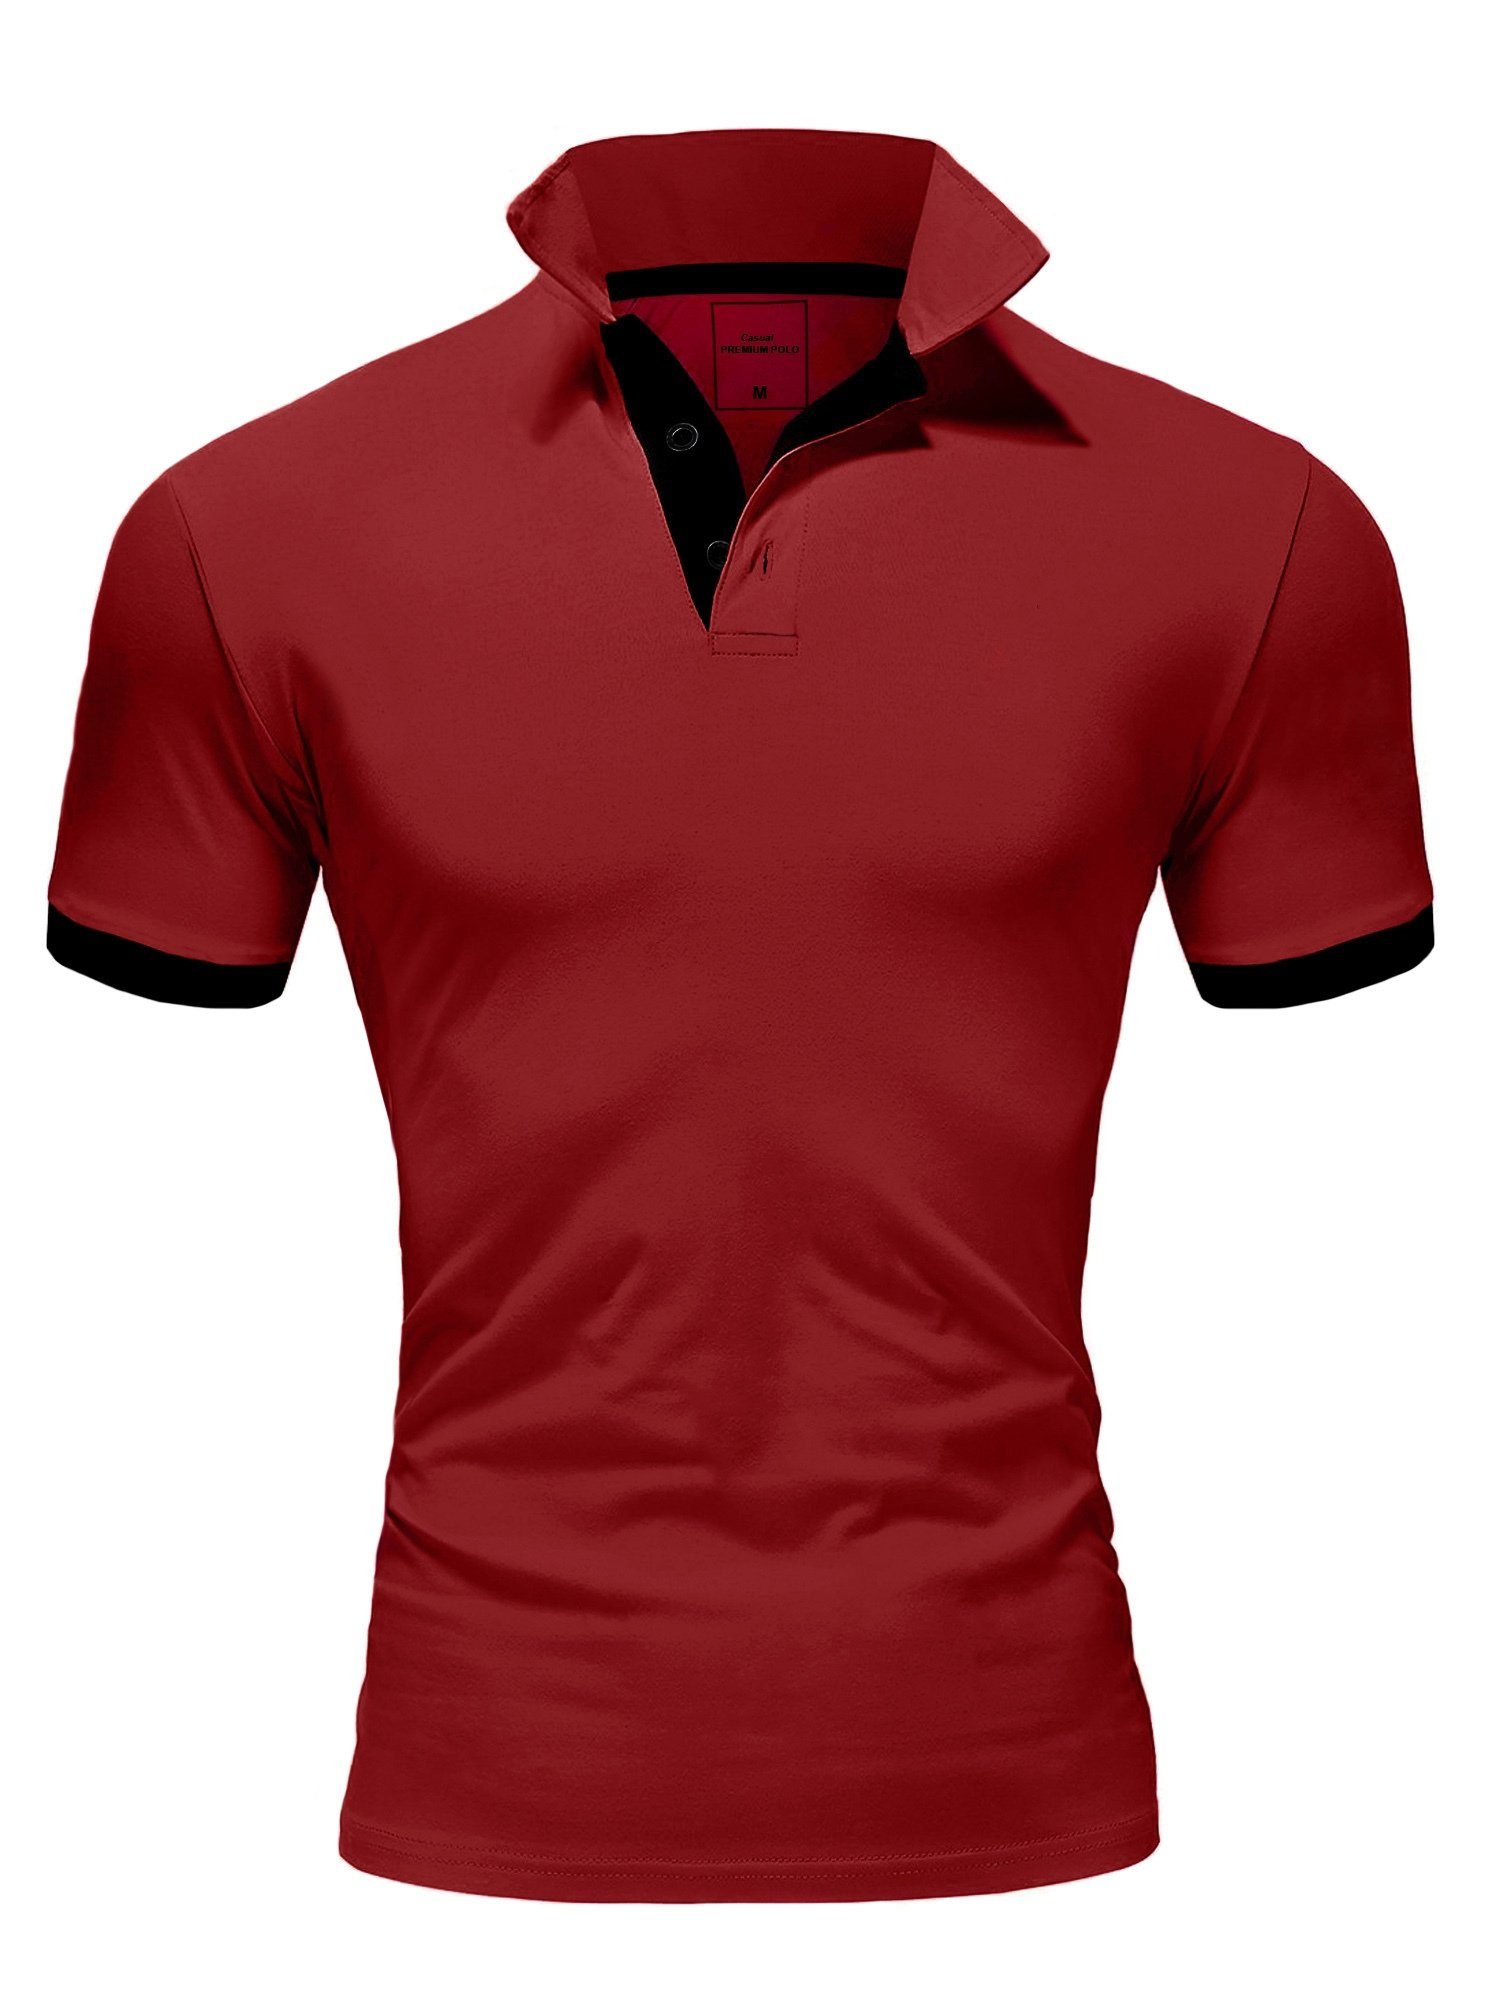 REPUBLIX Poloshirt RONALD kontrastierenden Piqué Qualität Herren mit Akzenten, Bordeaux/Schwarz in Shirt